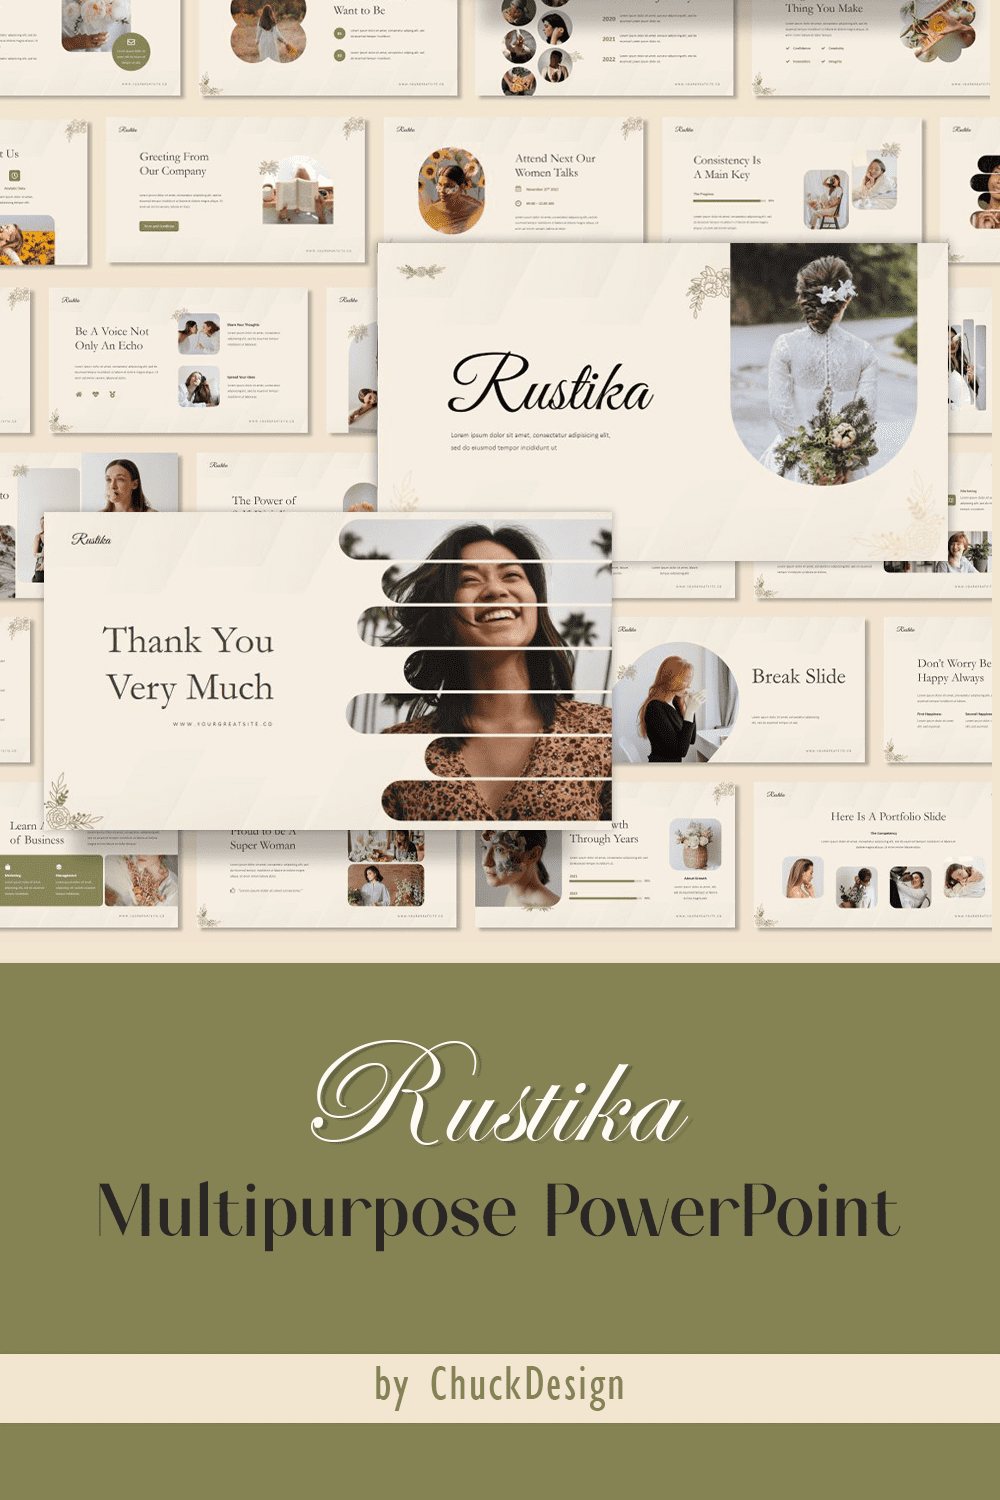 Rustika - Multipurpose PowerPoint pinterest image.